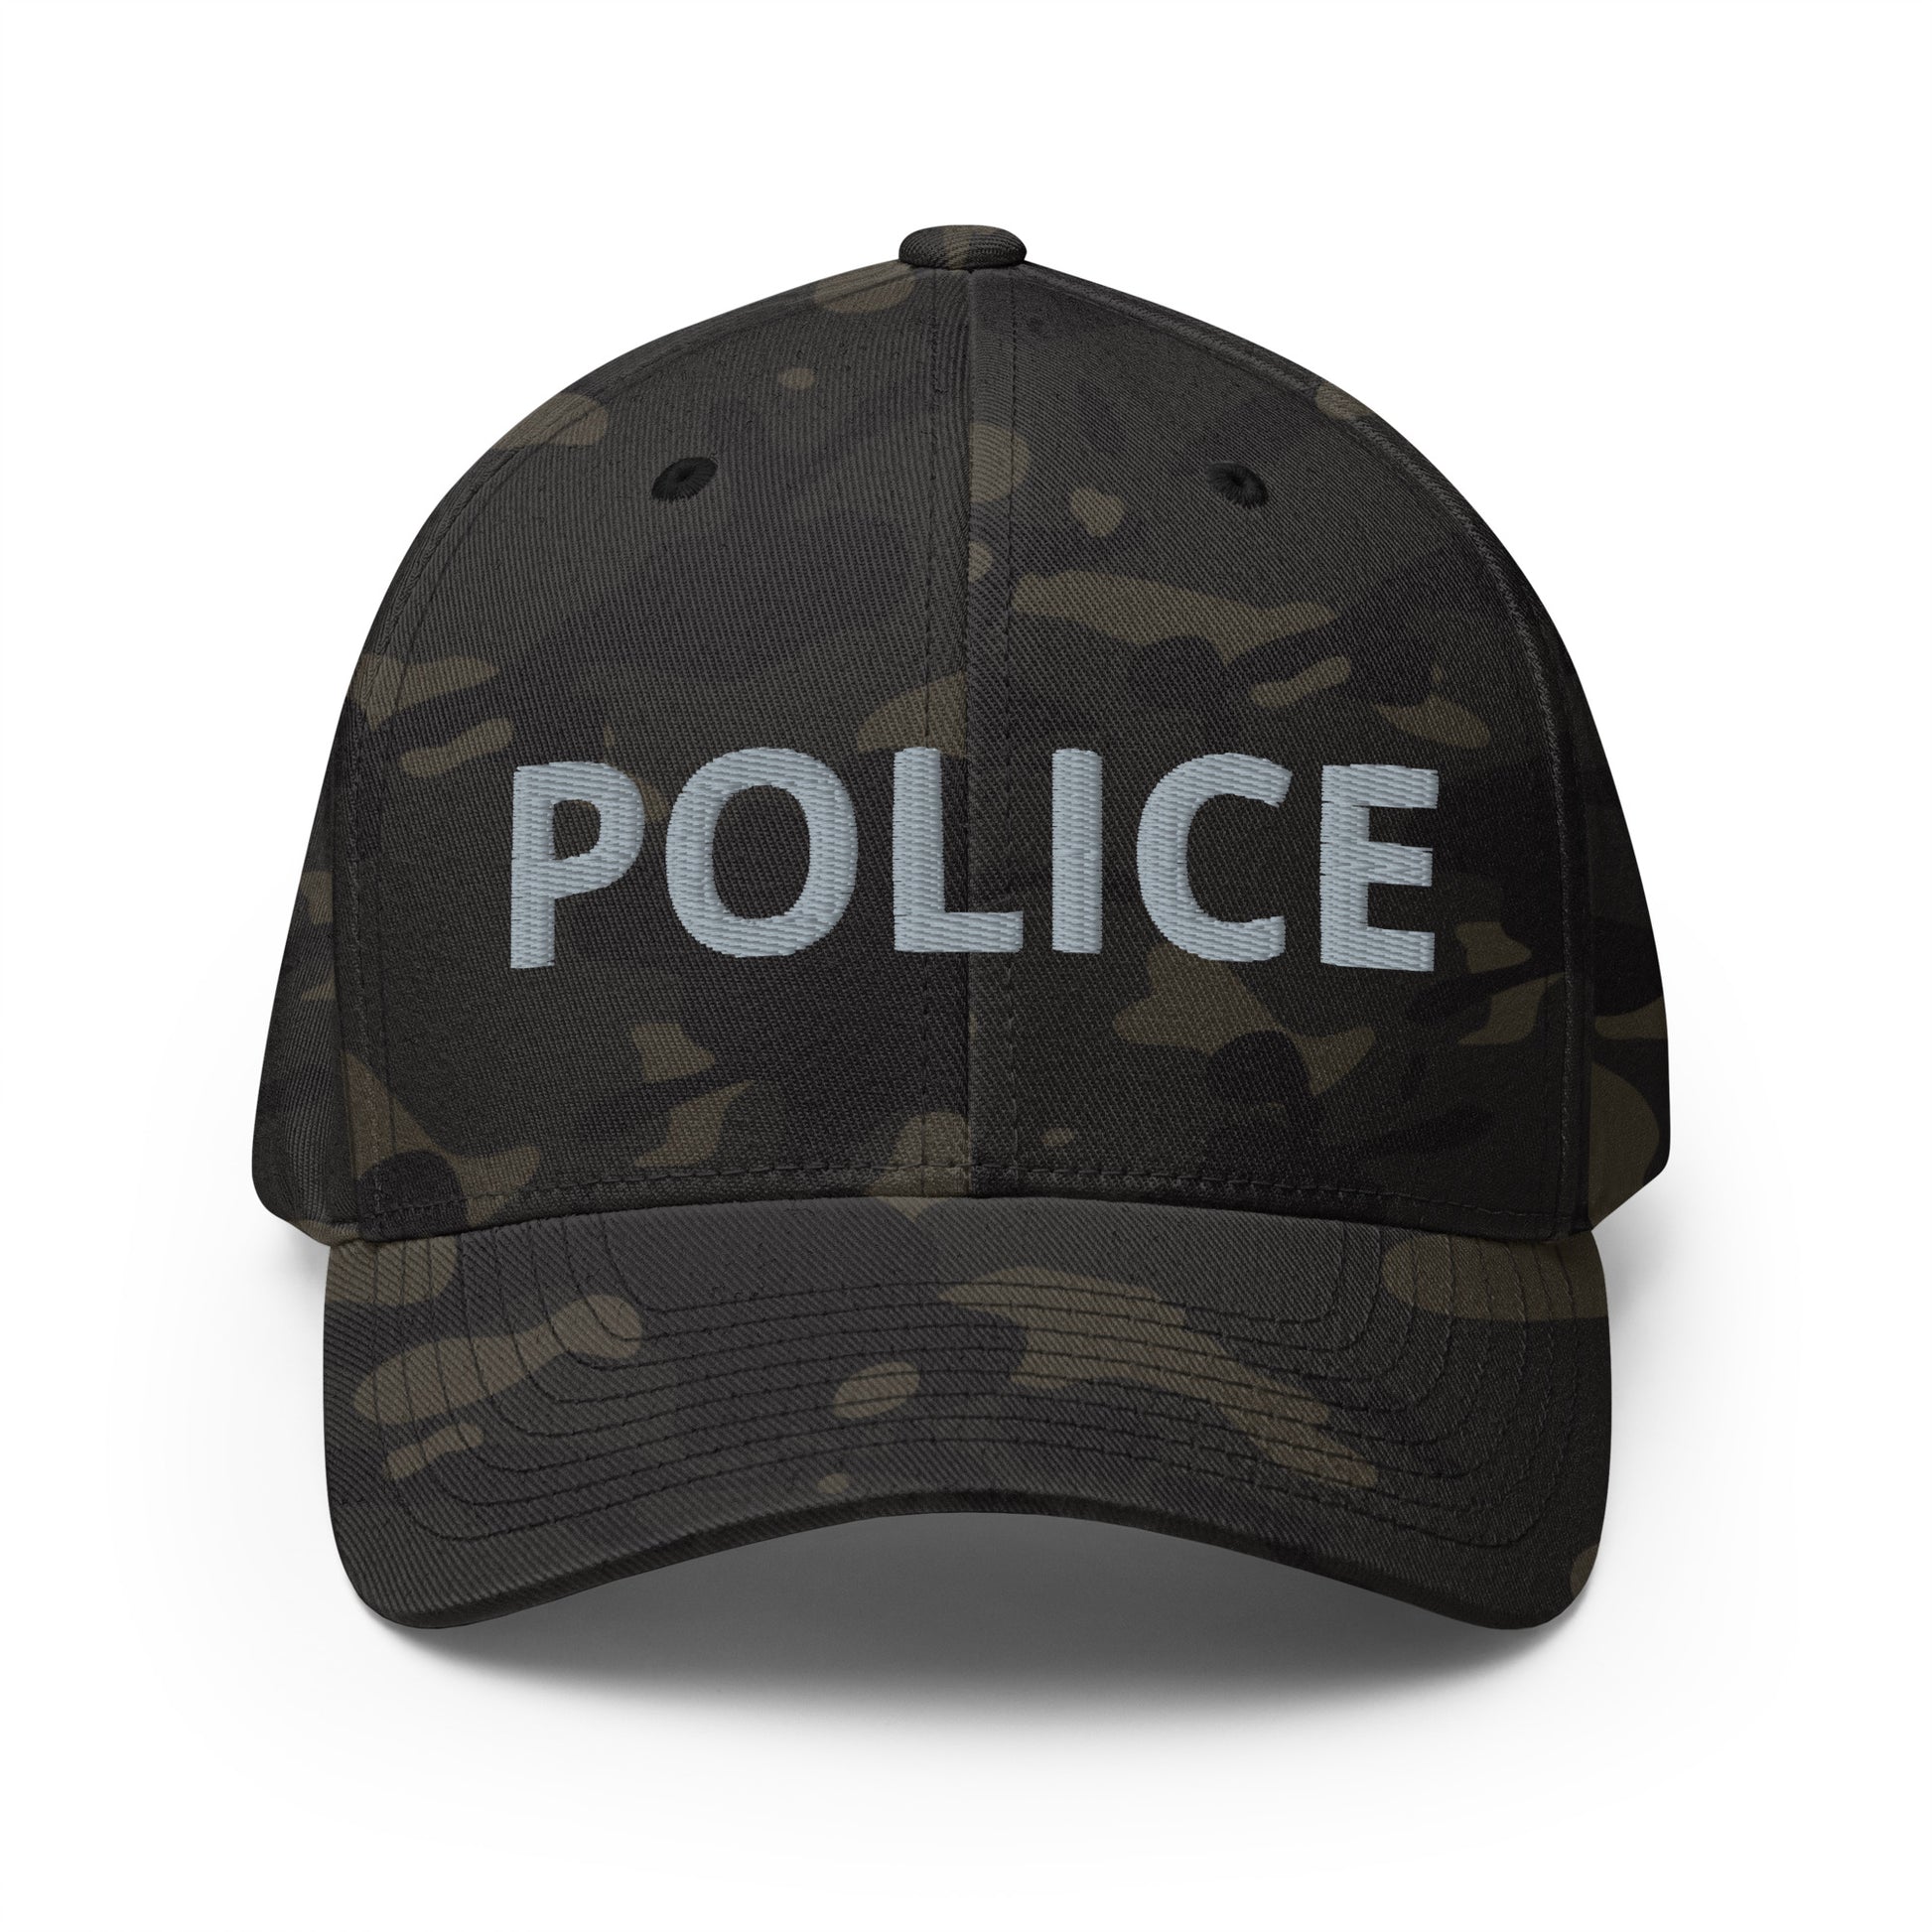 Police Duty Flexfit Baseball Cap-911 Duty Gear USA-911 Duty Gear USA